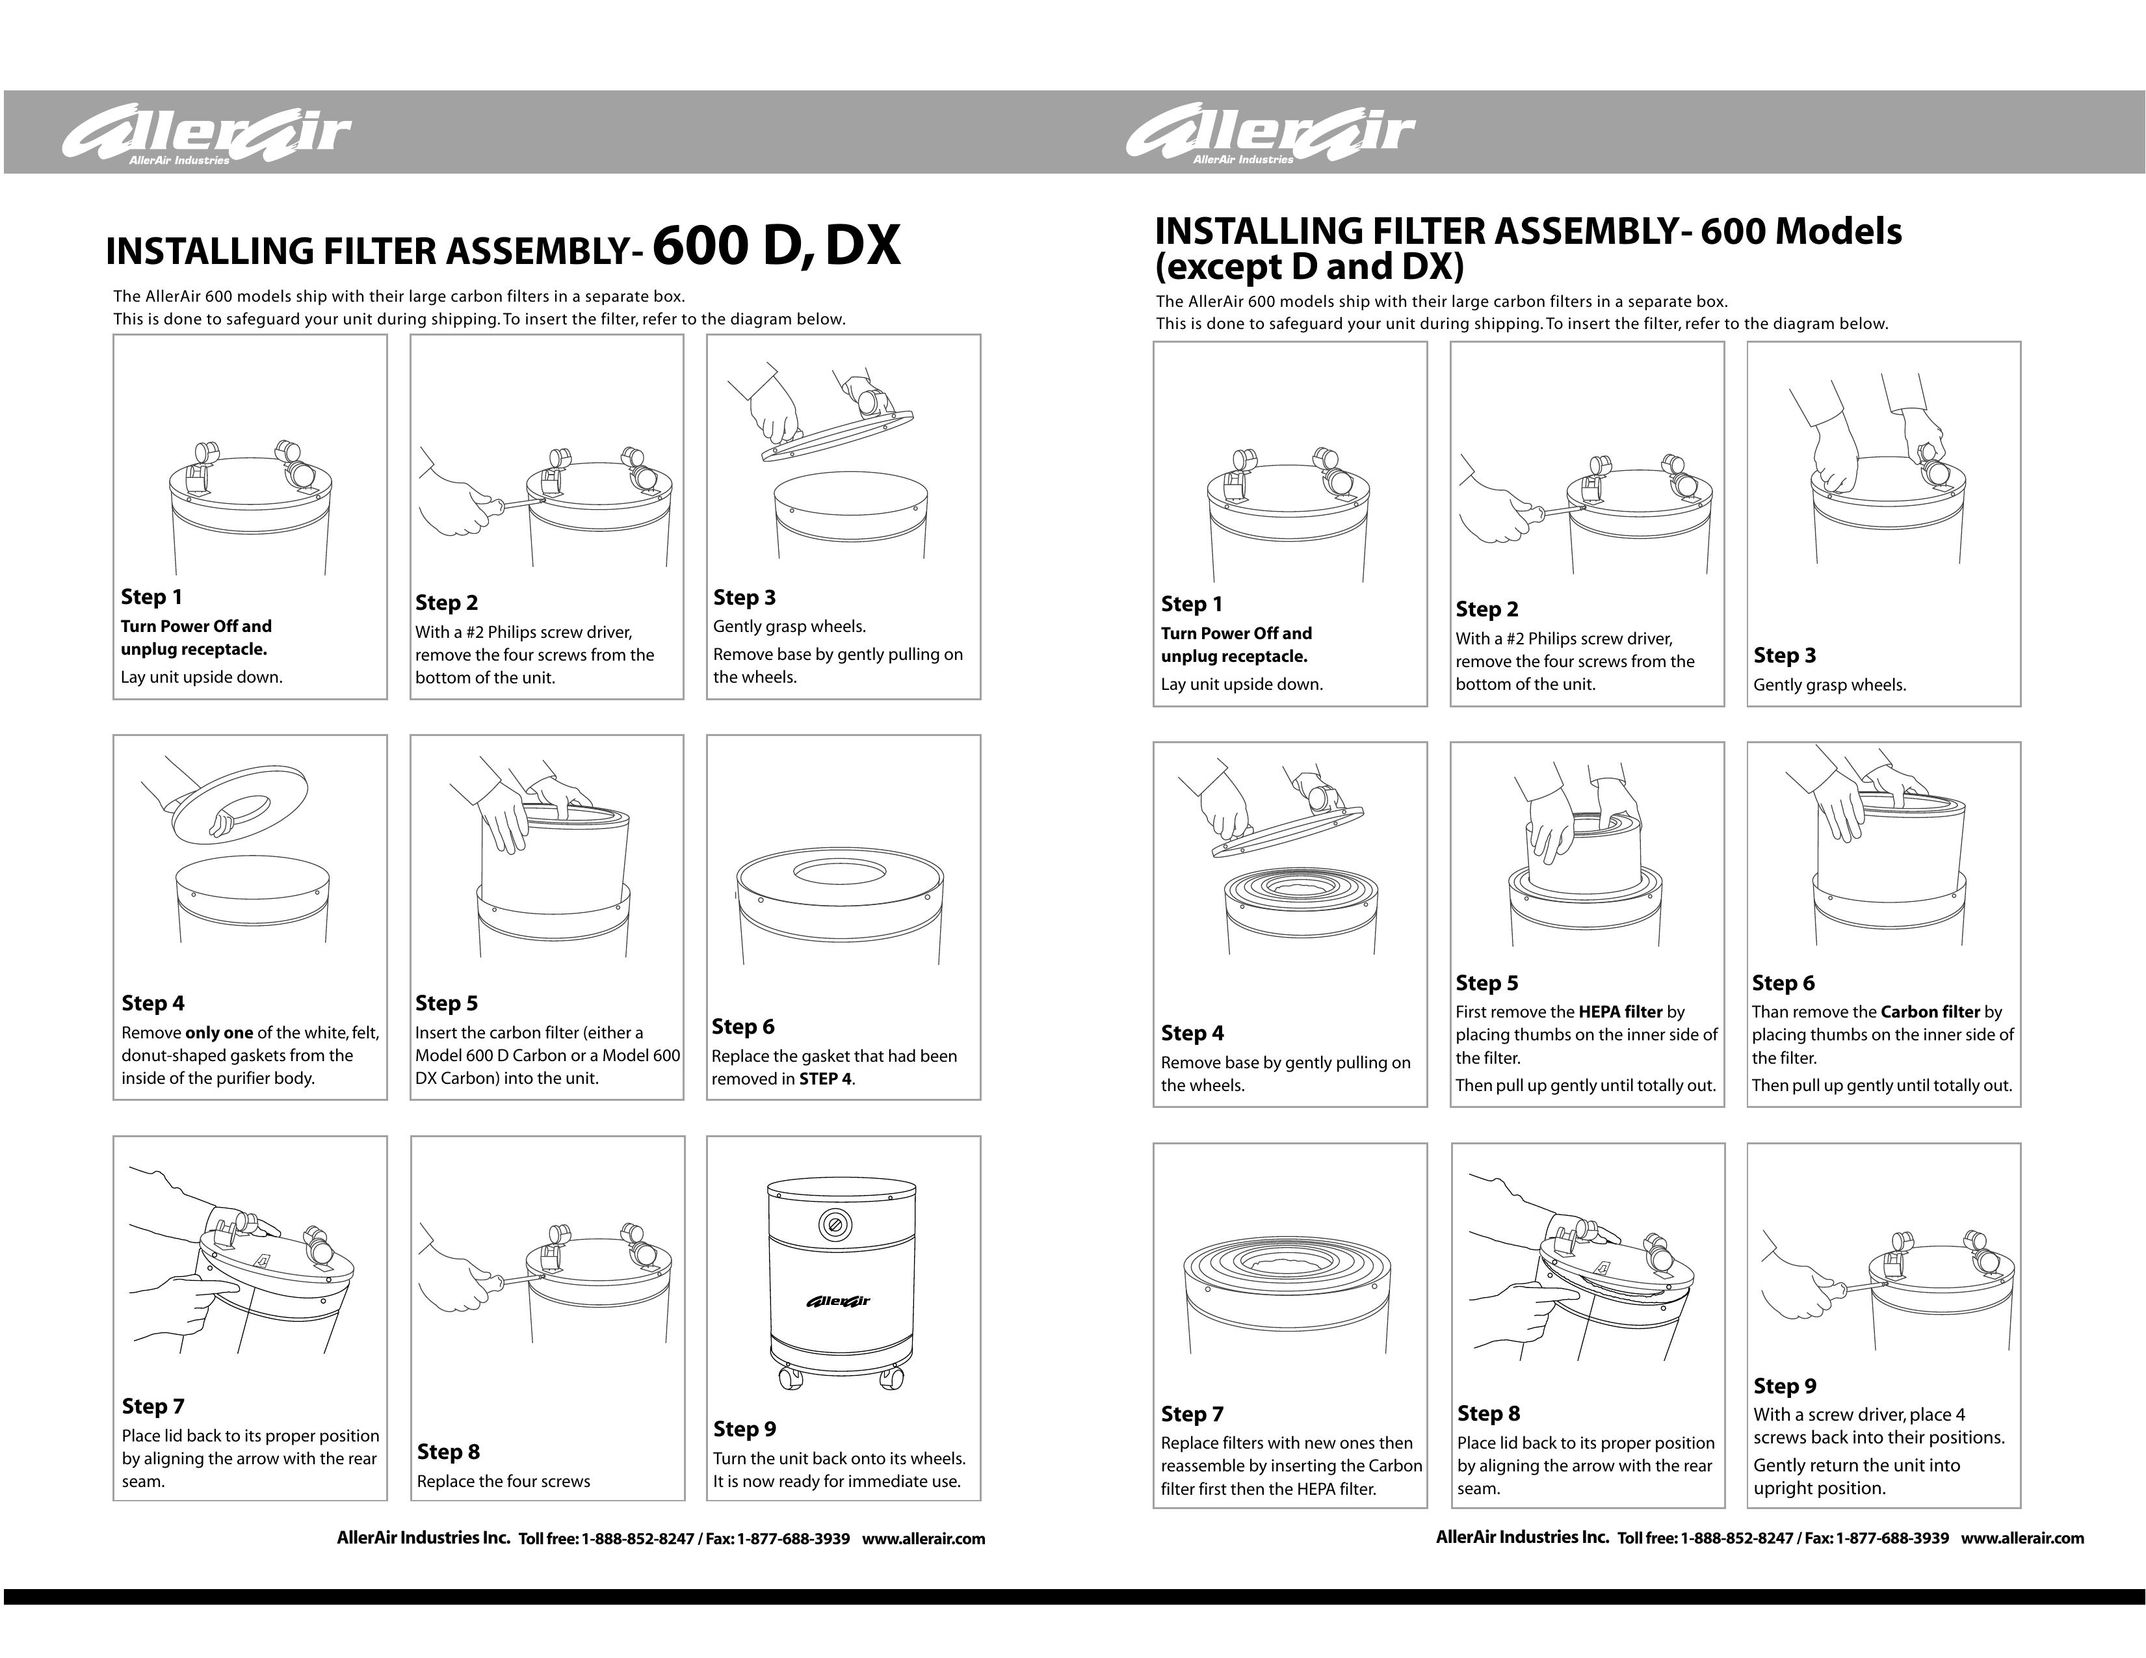 AllerAir 600 D Air Cleaner User Manual